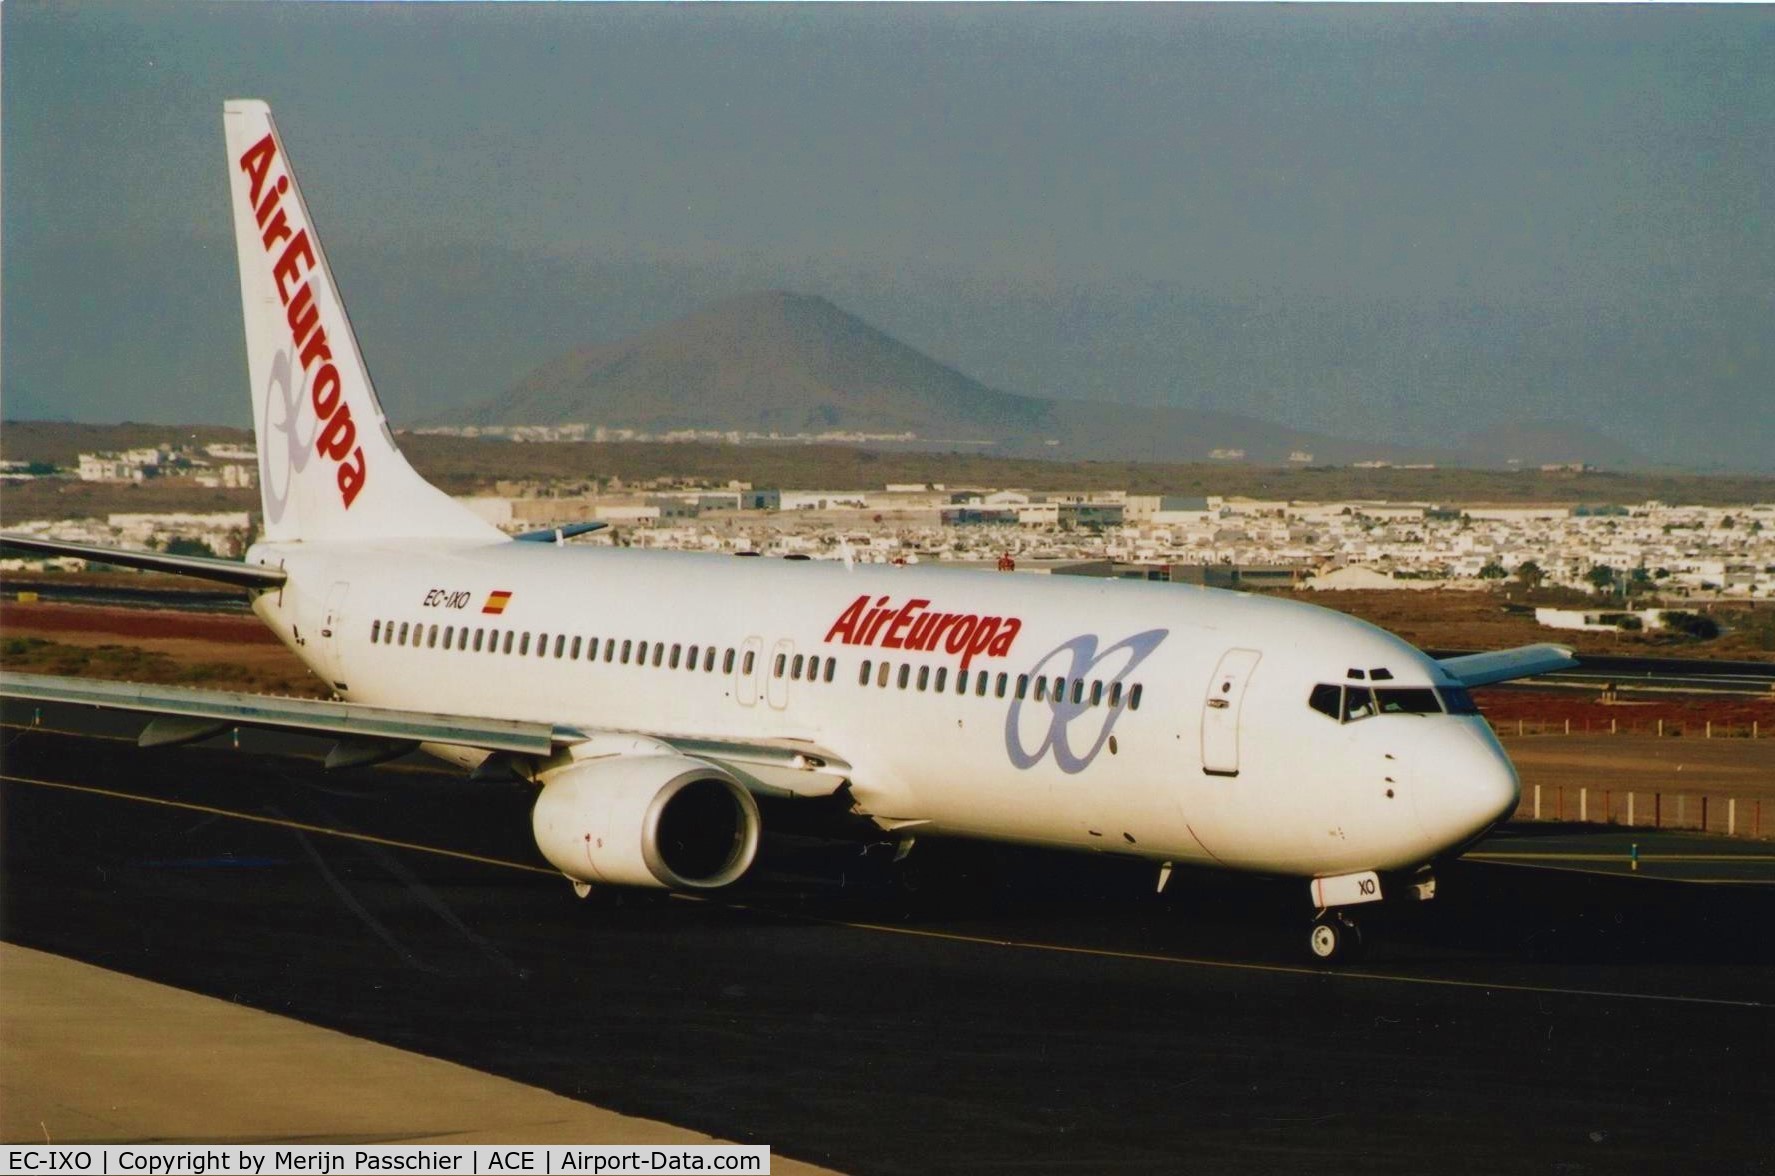 EC-IXO, 2000 Boeing 737-883 C/N 30467, bought slide